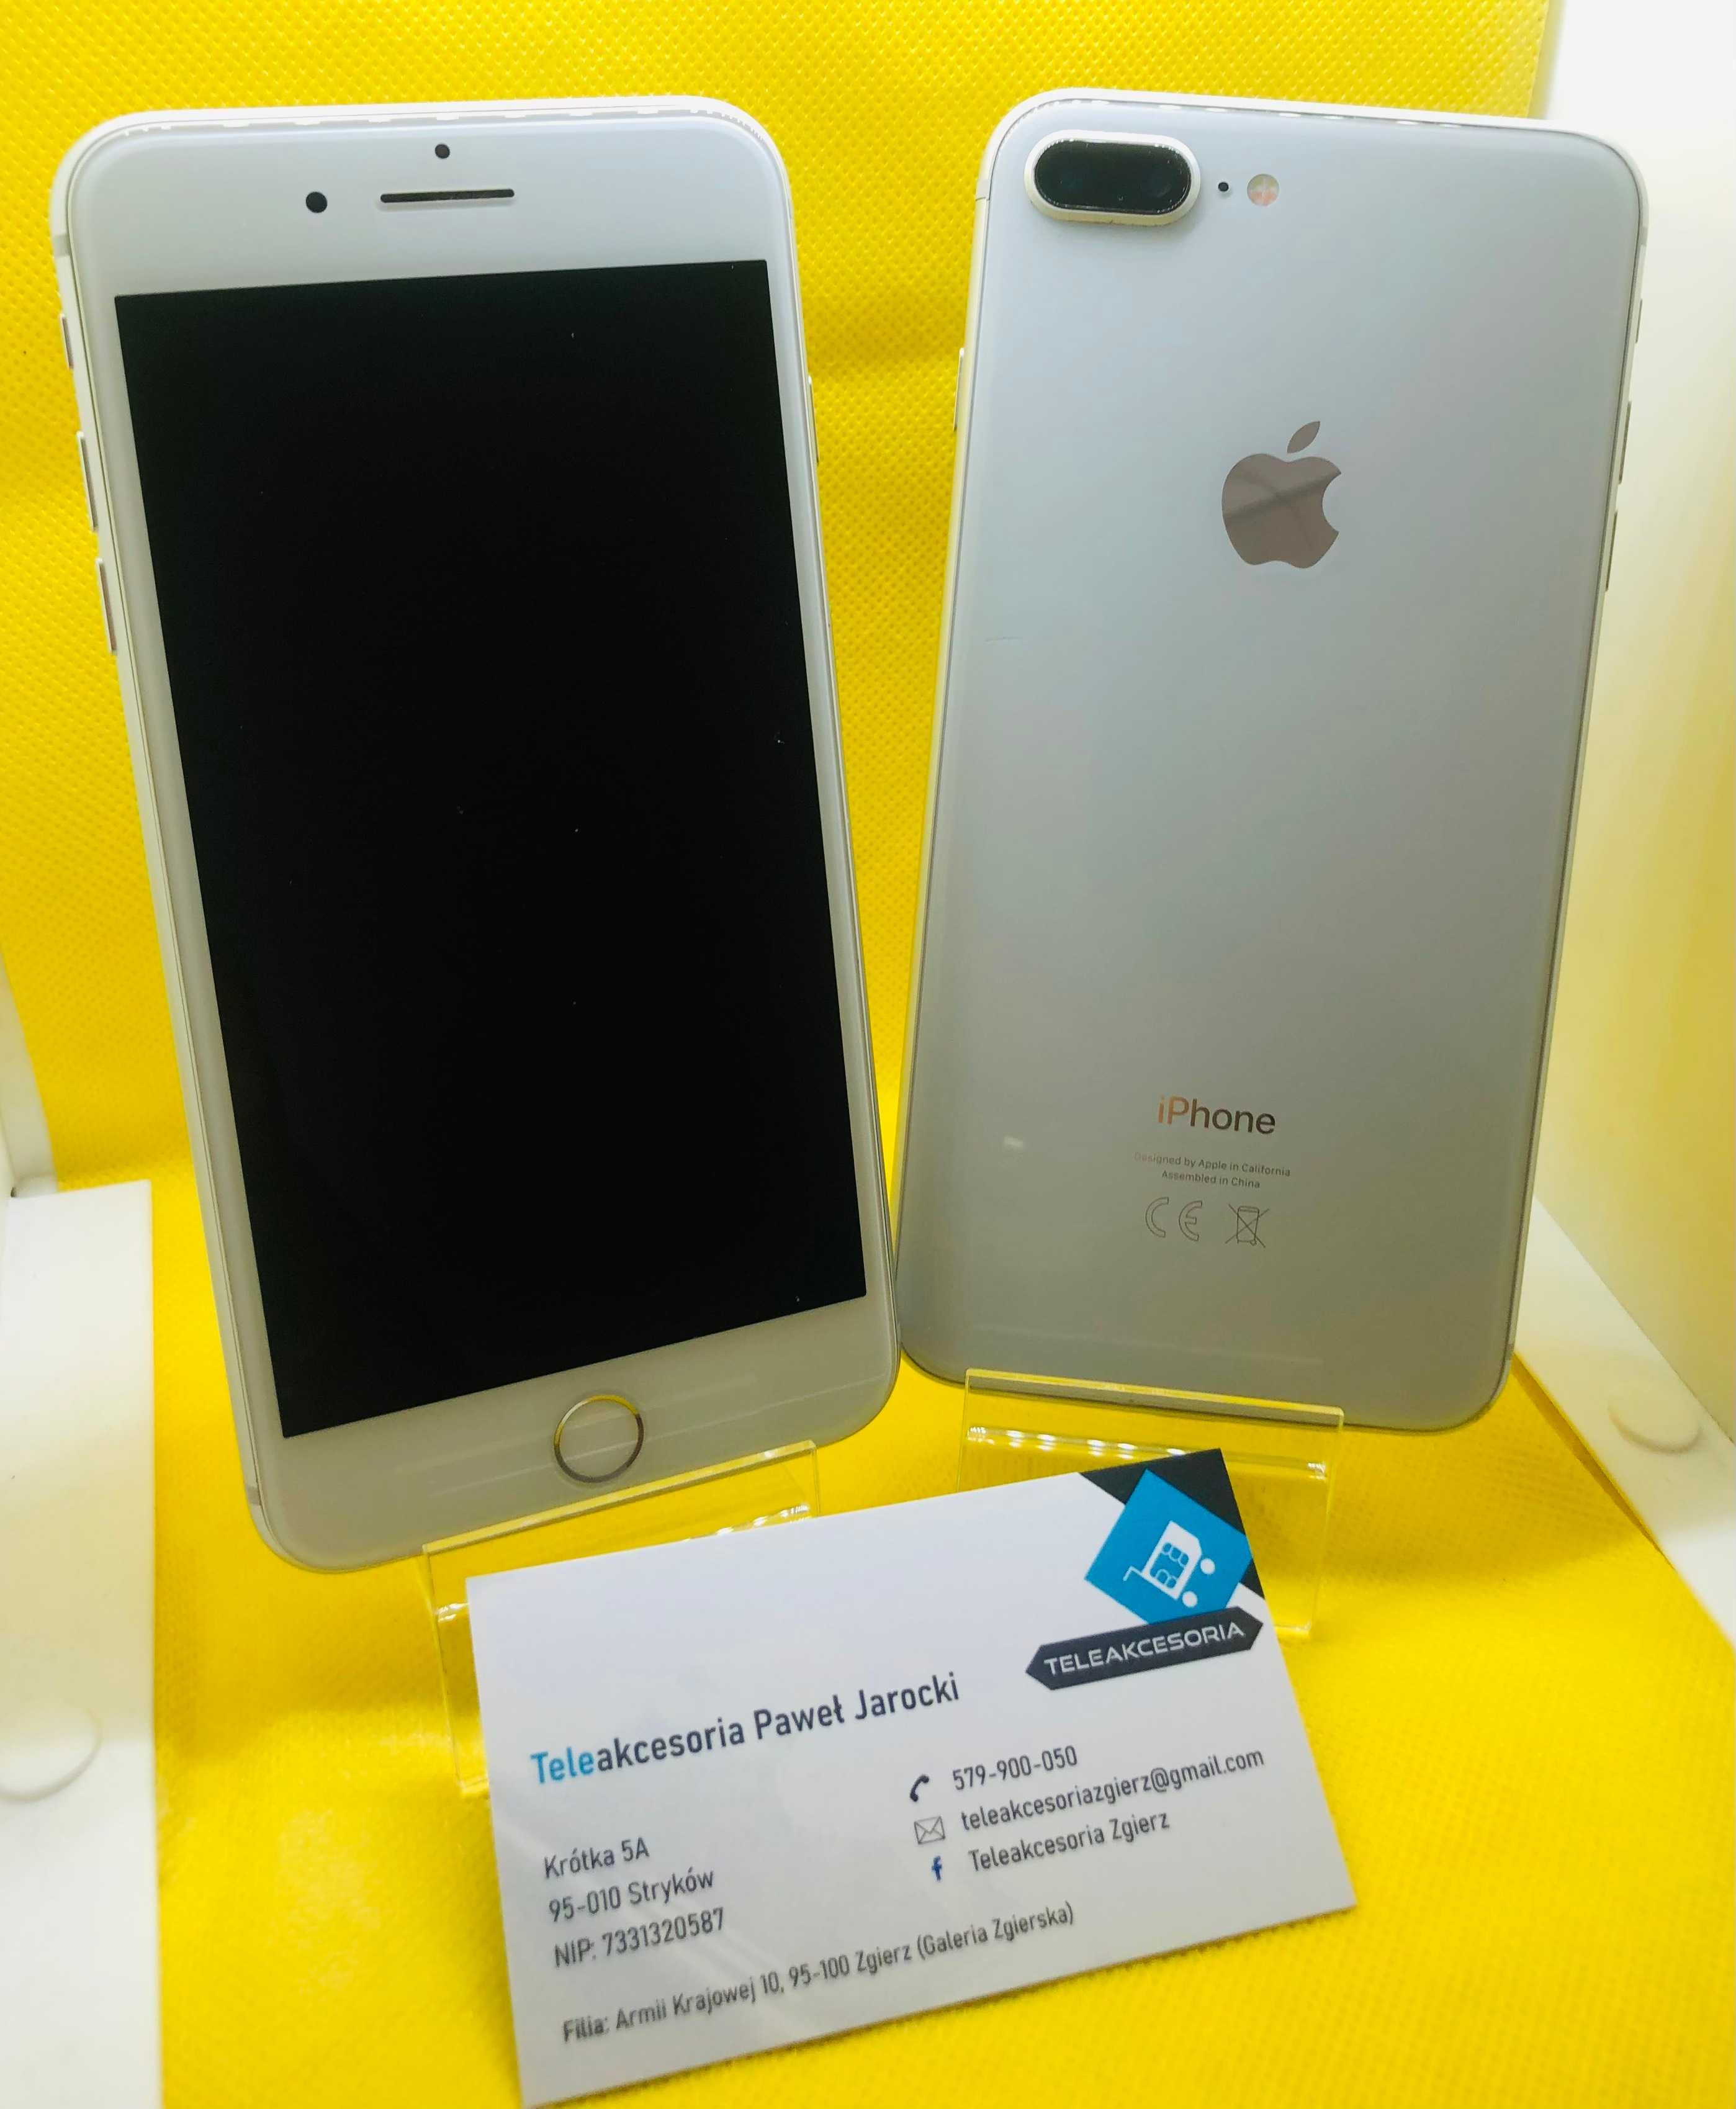 Apple IPHONE 8 PLUS silver 64gb Teleakcesoria GALERIA Cena:699zł